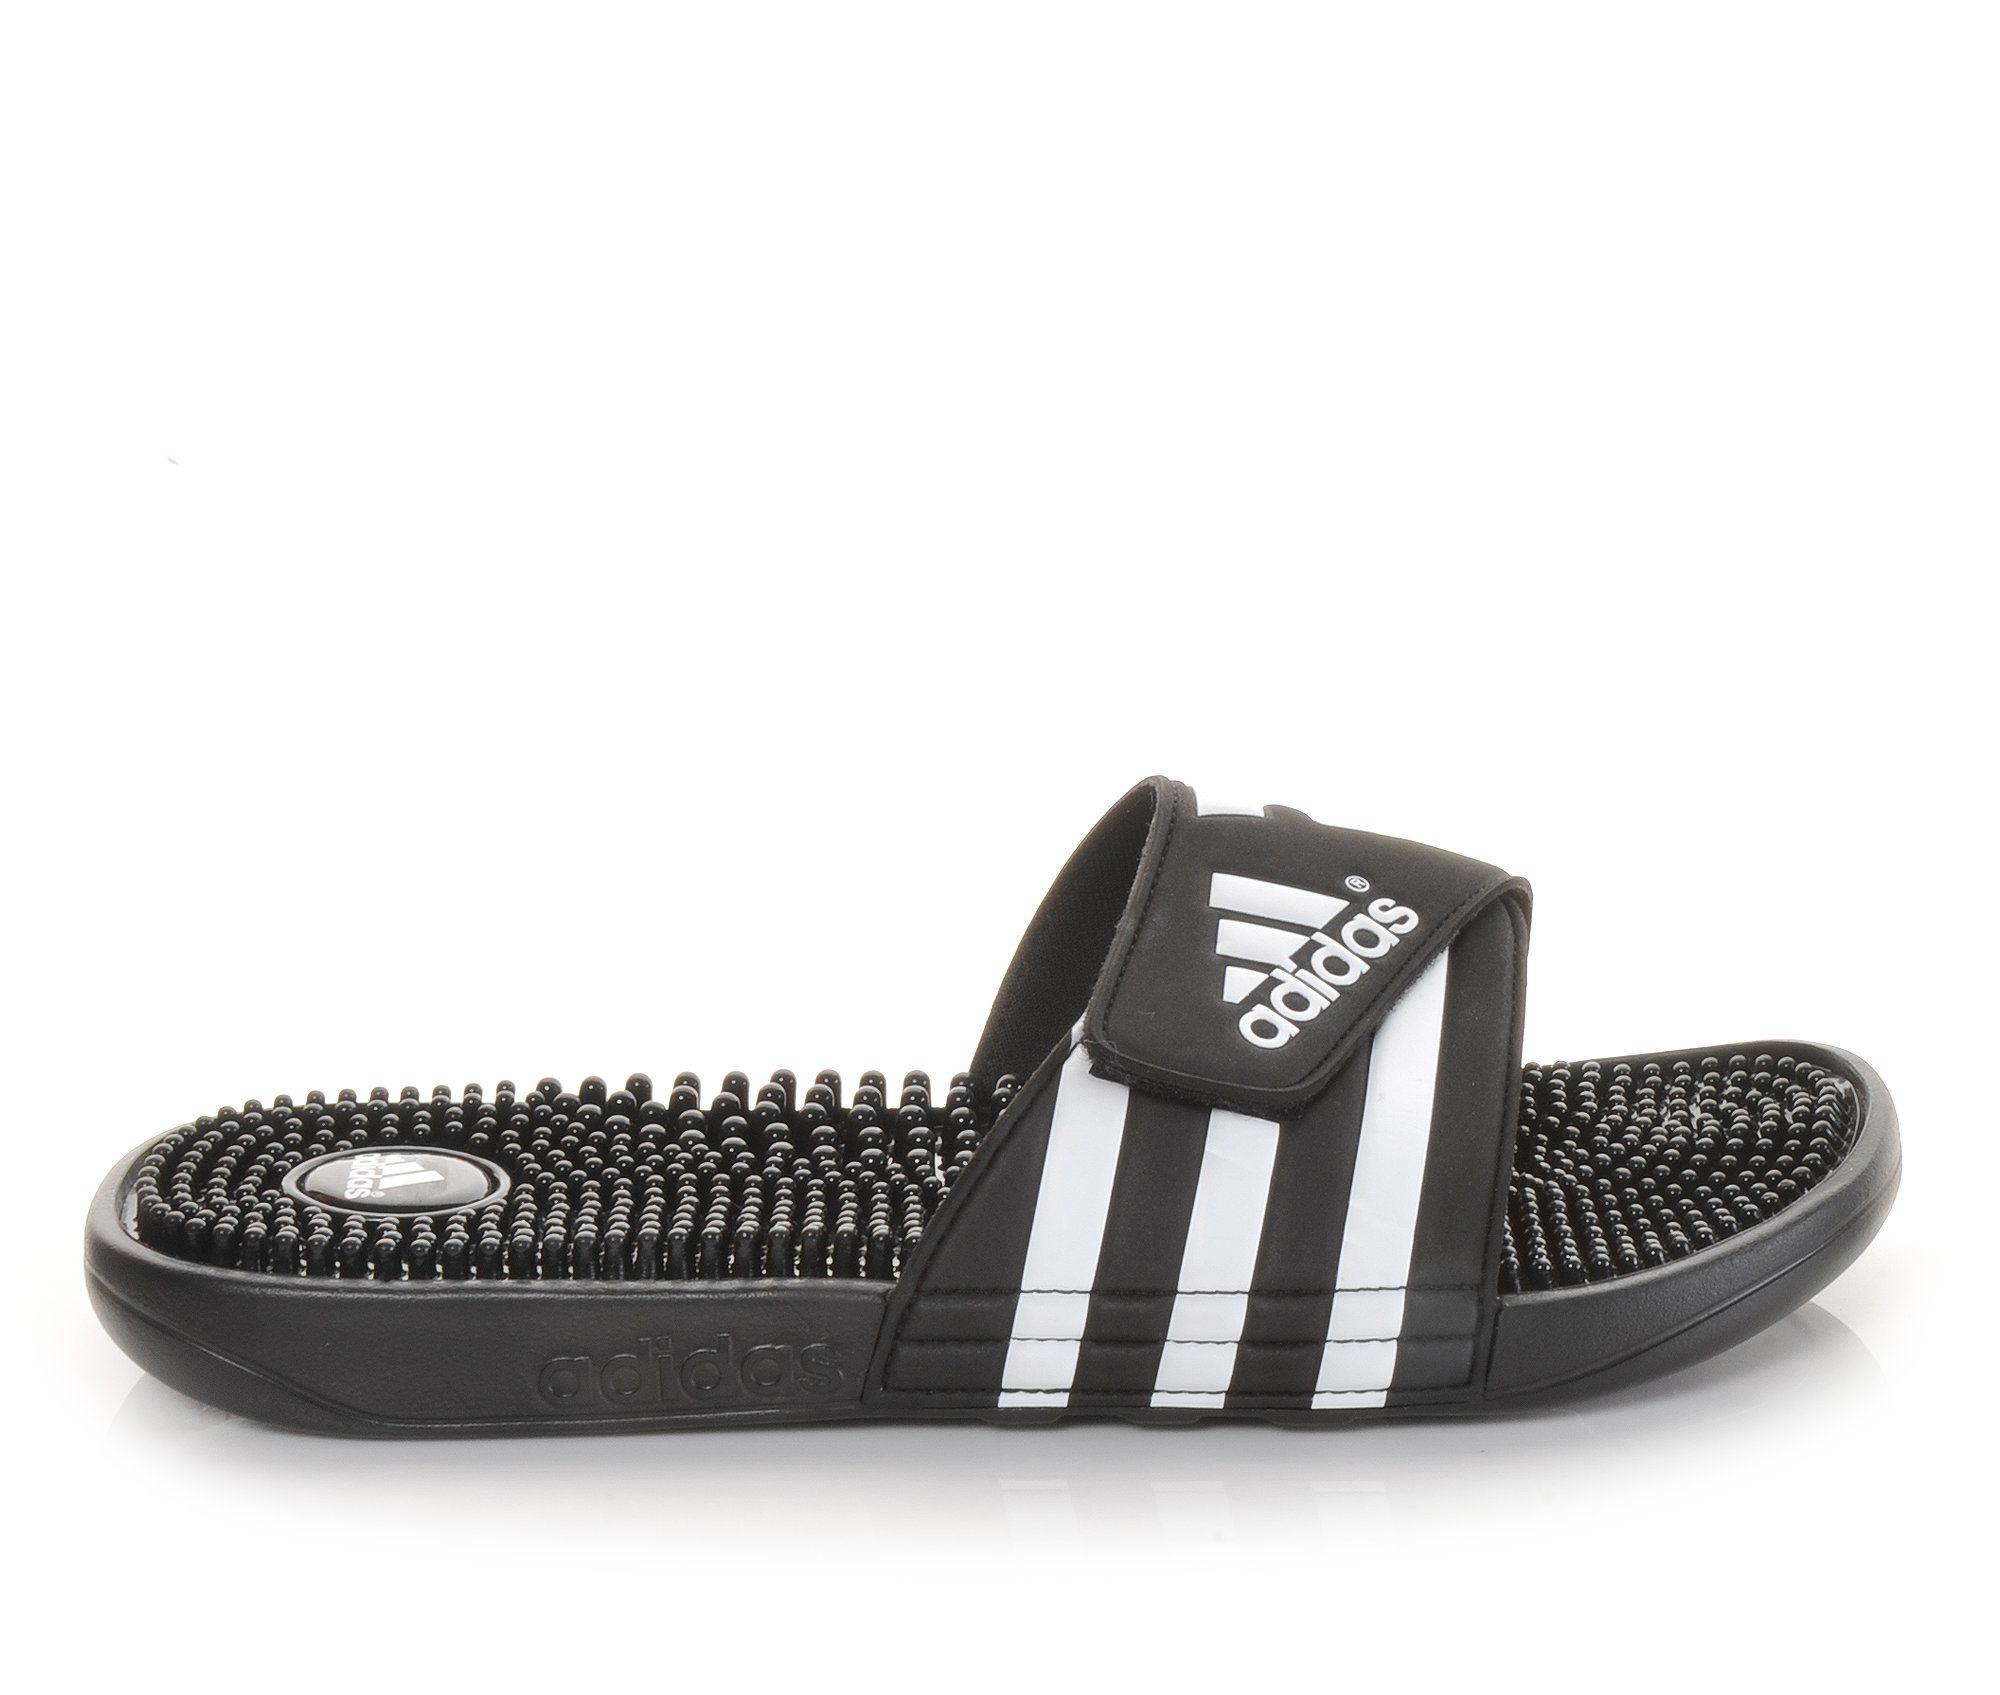 adidas Originals Rubber Black And White Adissage Sandals for Men - Save ...